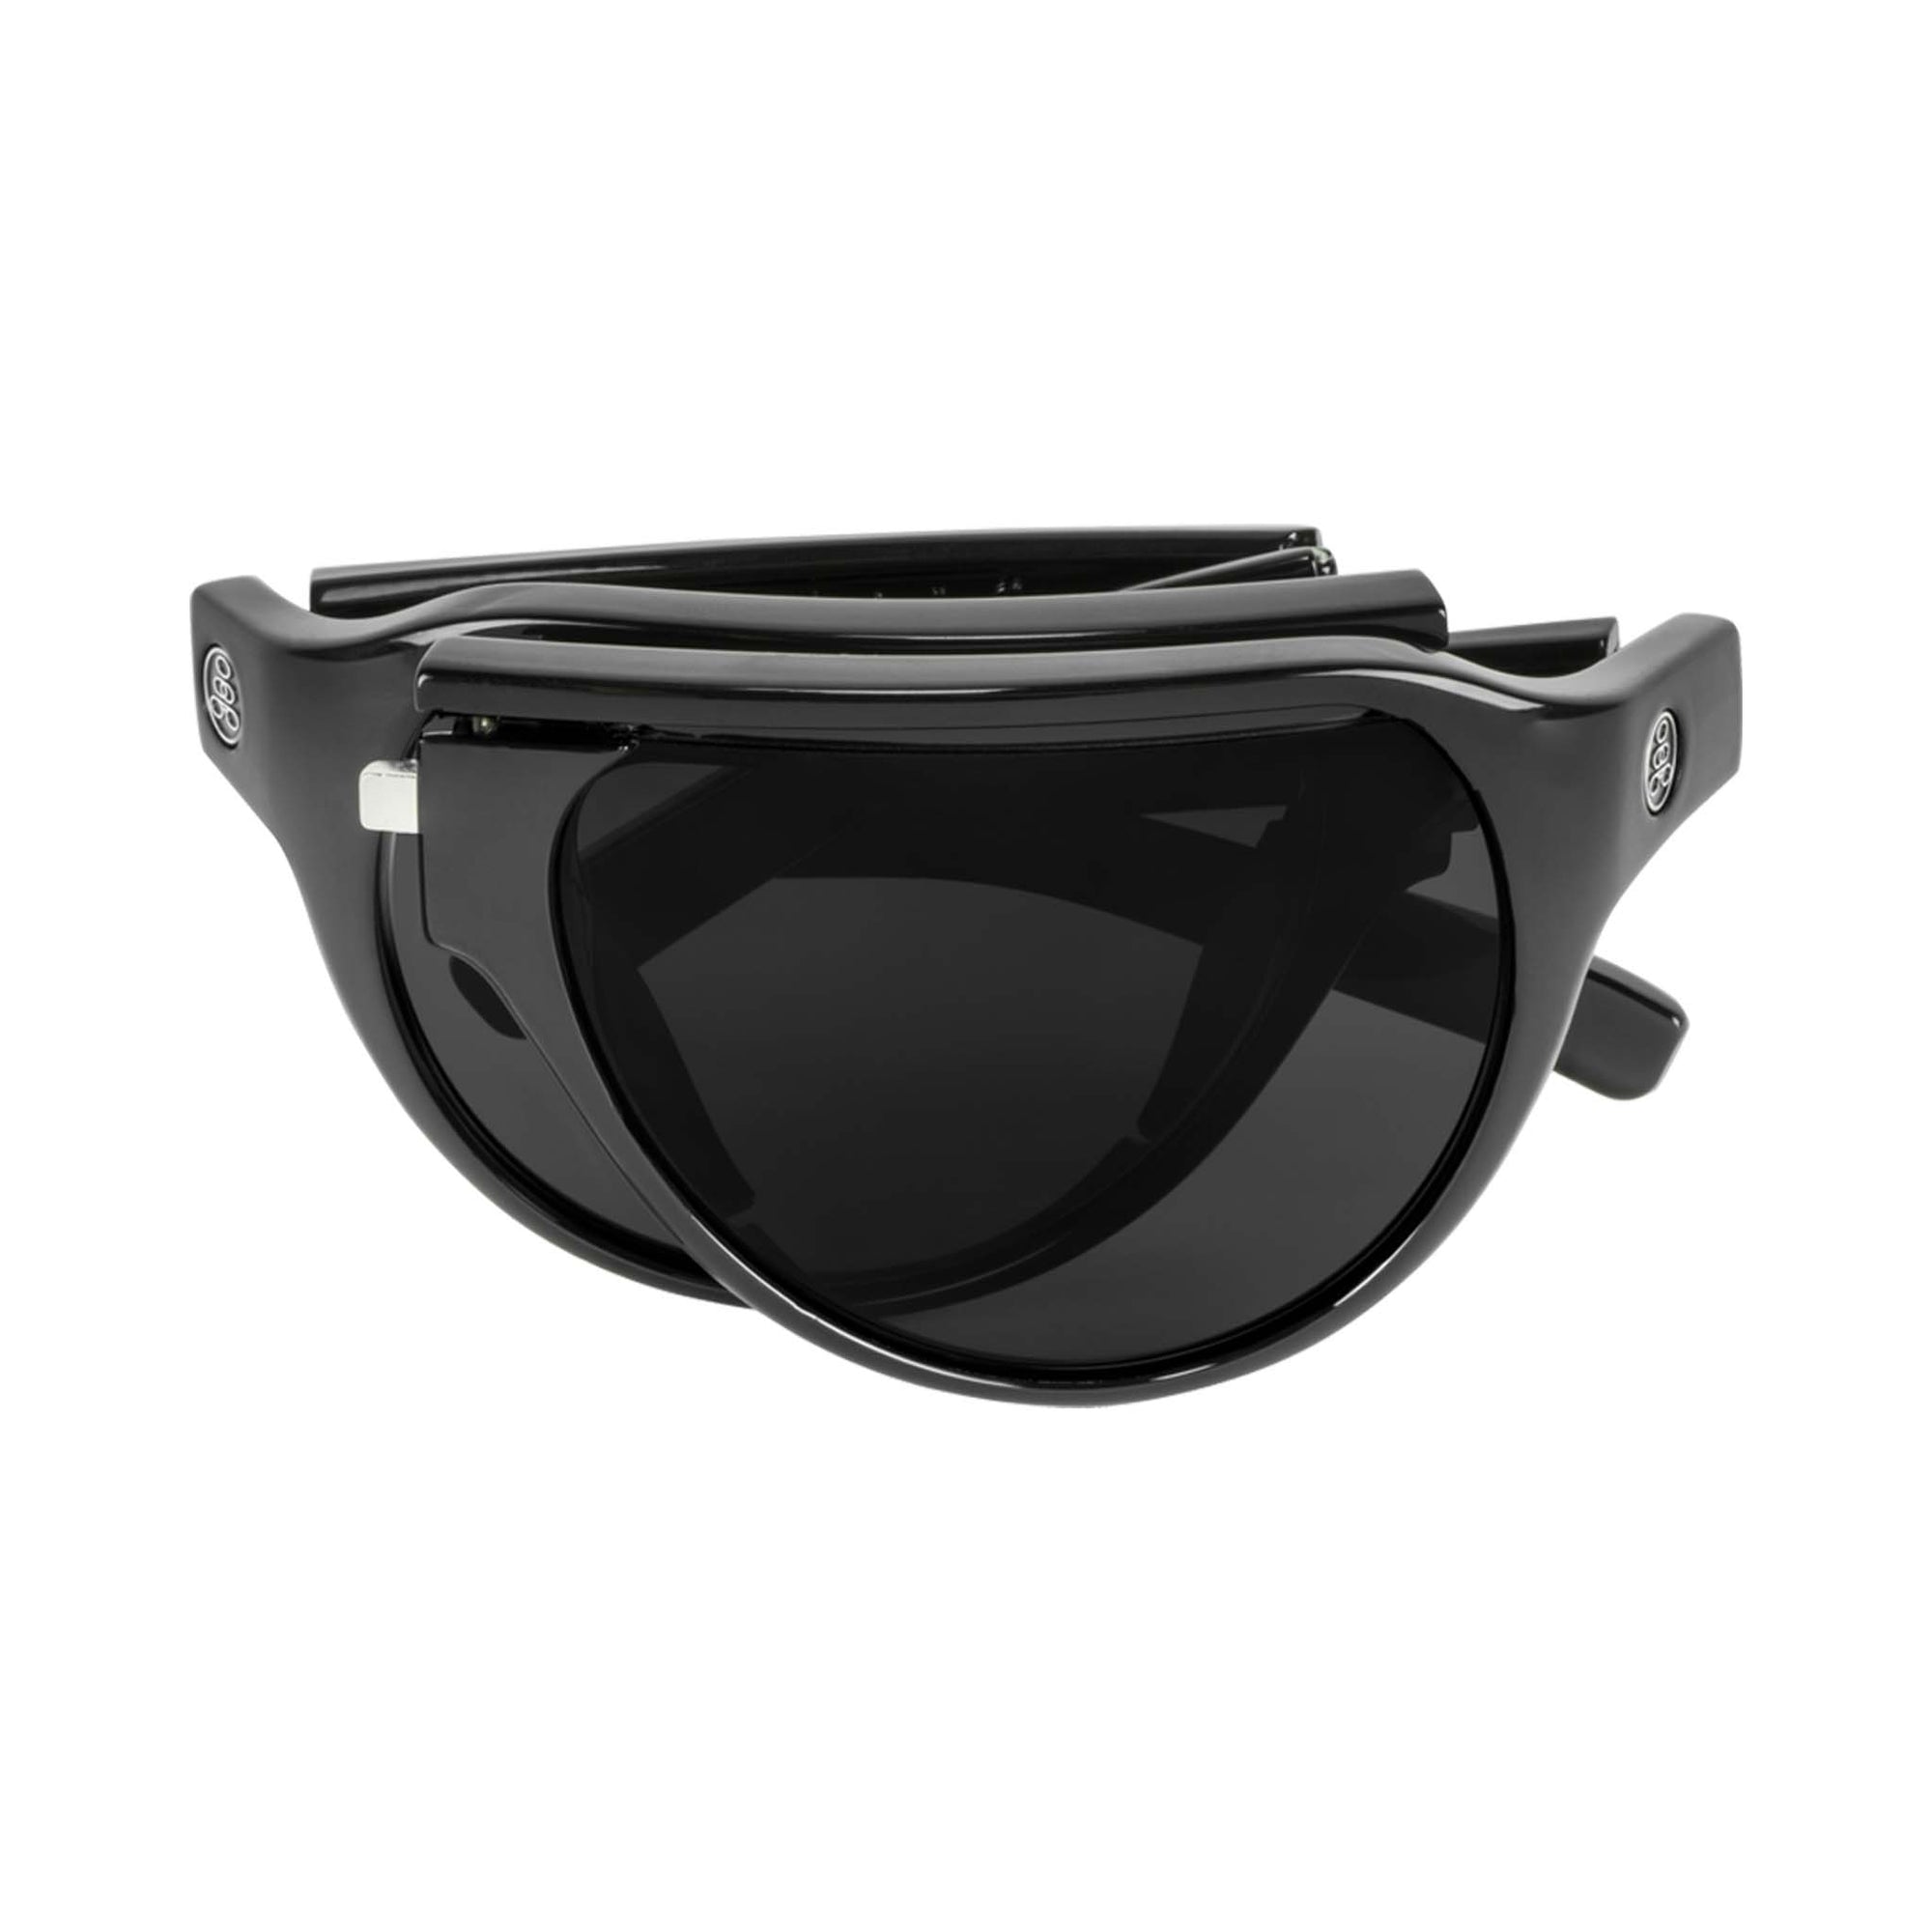 Popticals, Premium Compact Sunglasses, PopAir, 300010-BGGS, Standard Sunglasses, Gloss Black Frame, Gray Lenses, Compact View